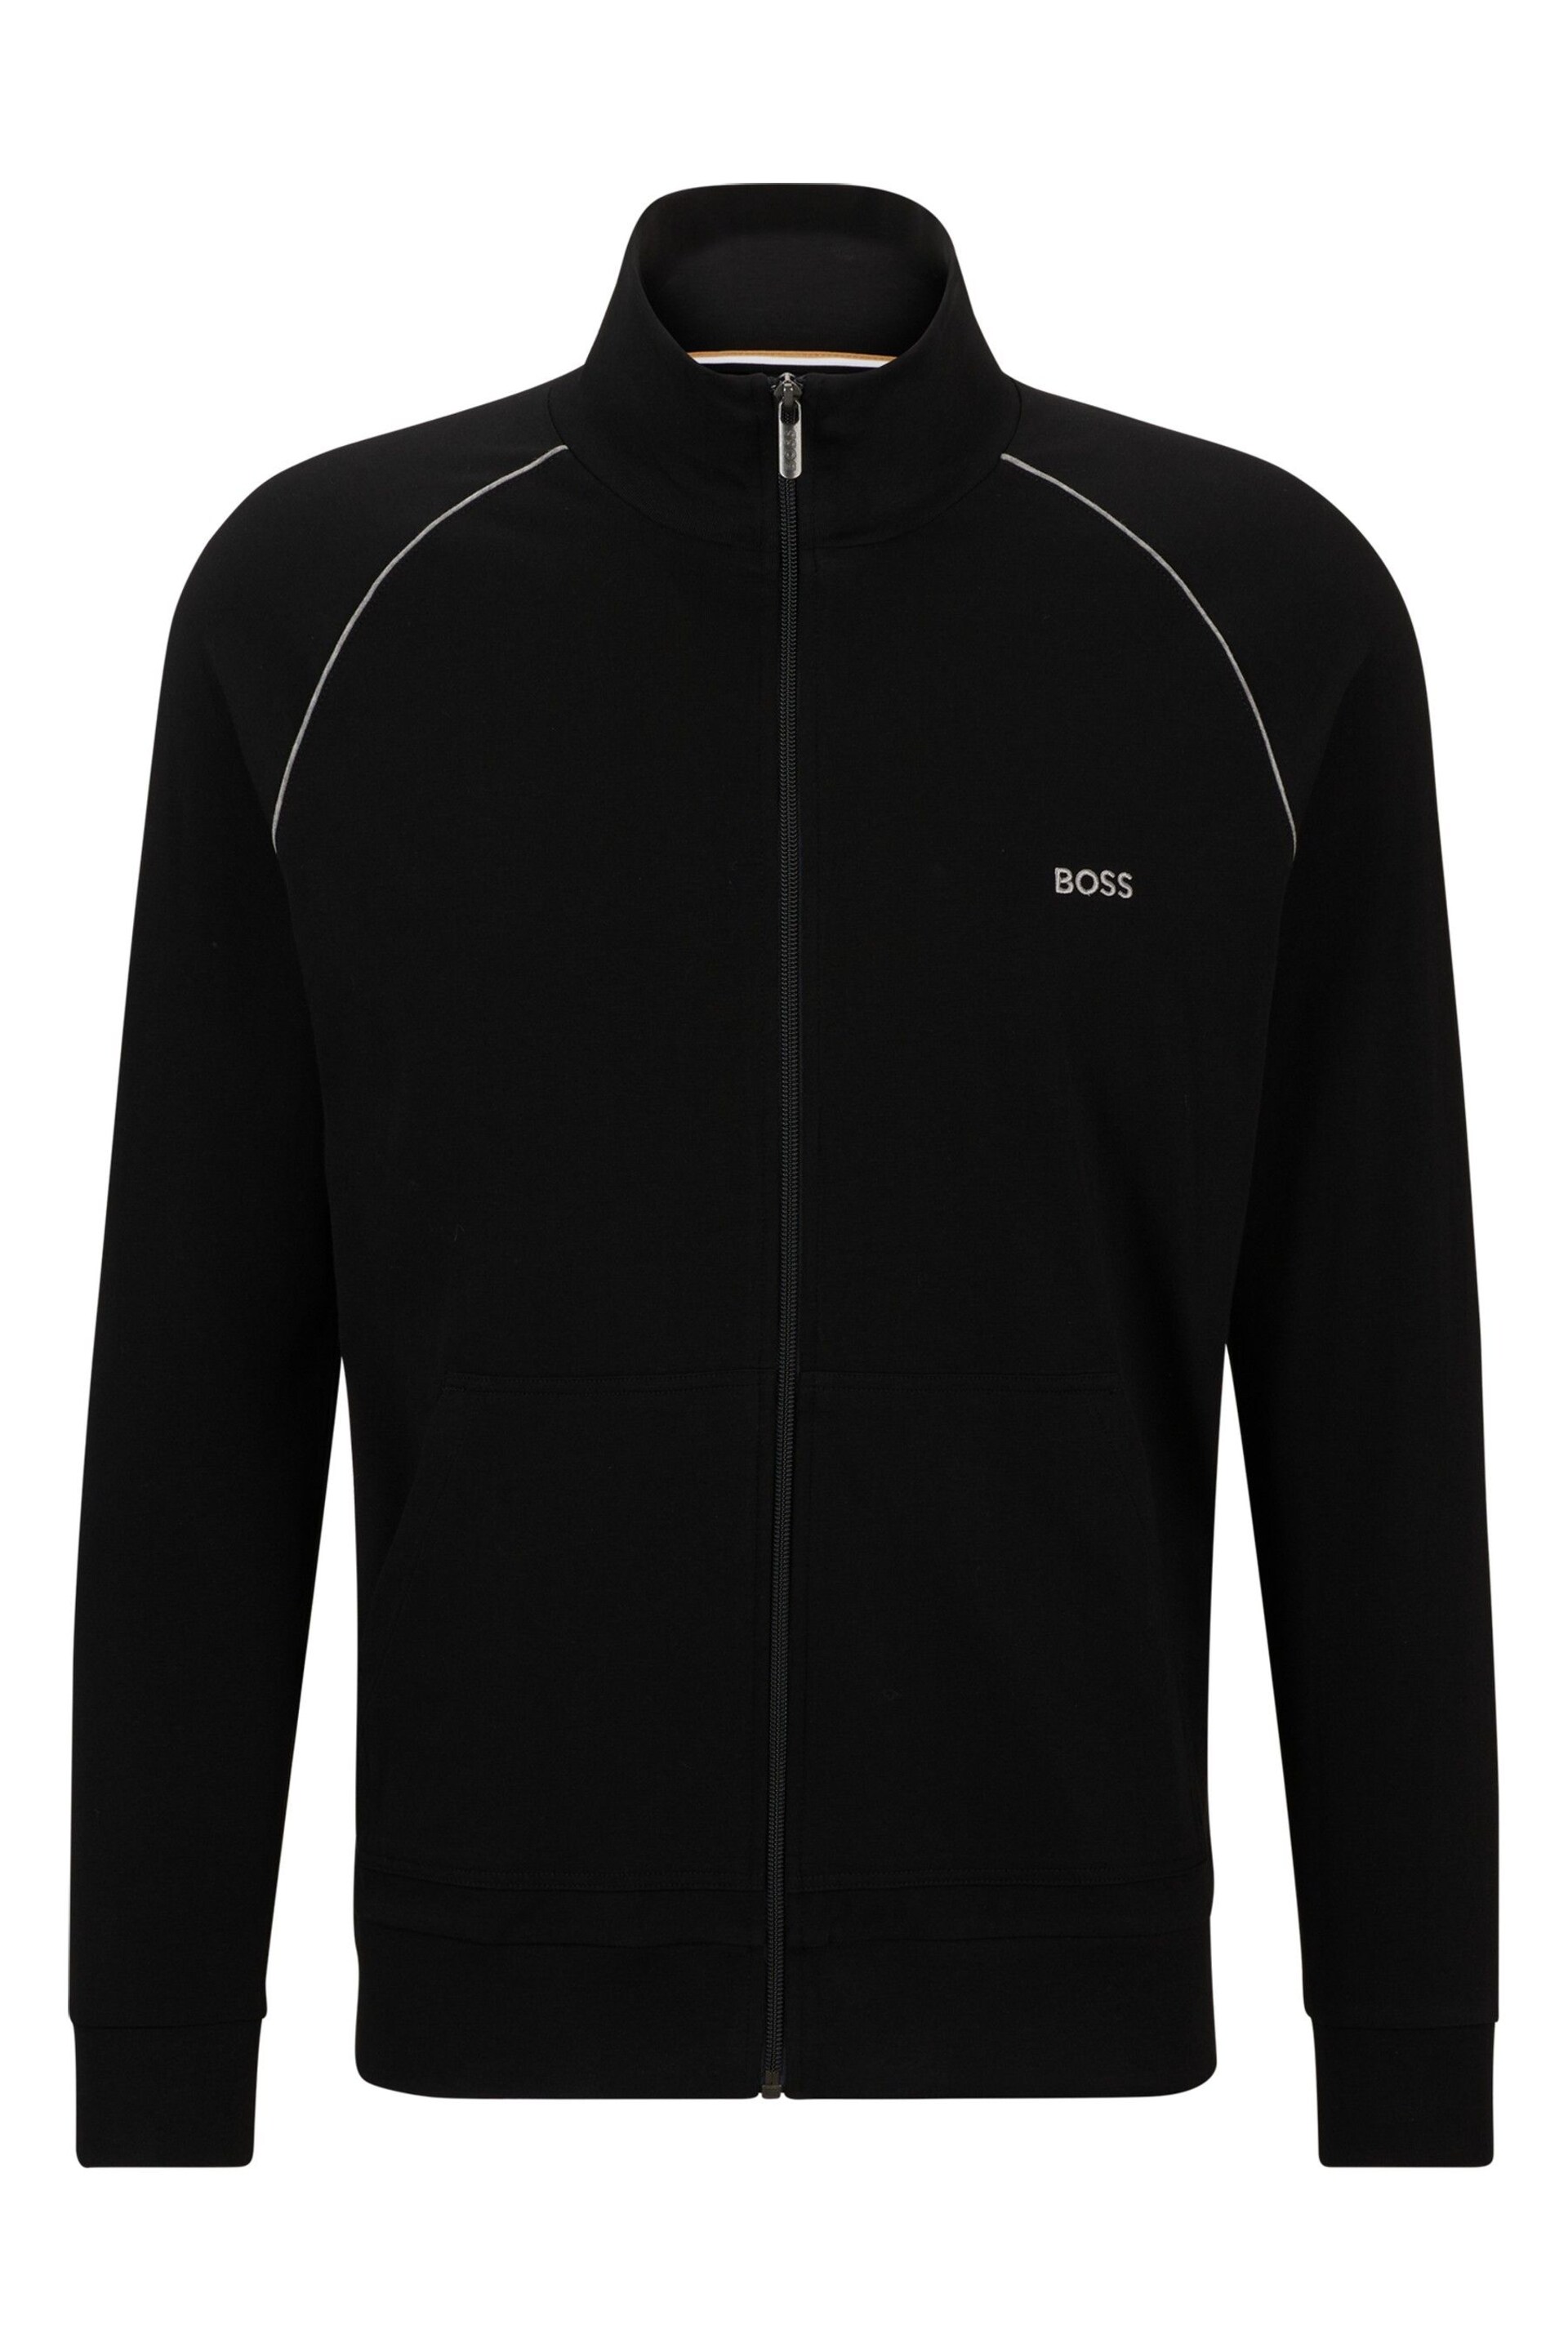 BOSS Black Zip Up Stretch Cotton Sweatshirt - Image 5 of 5